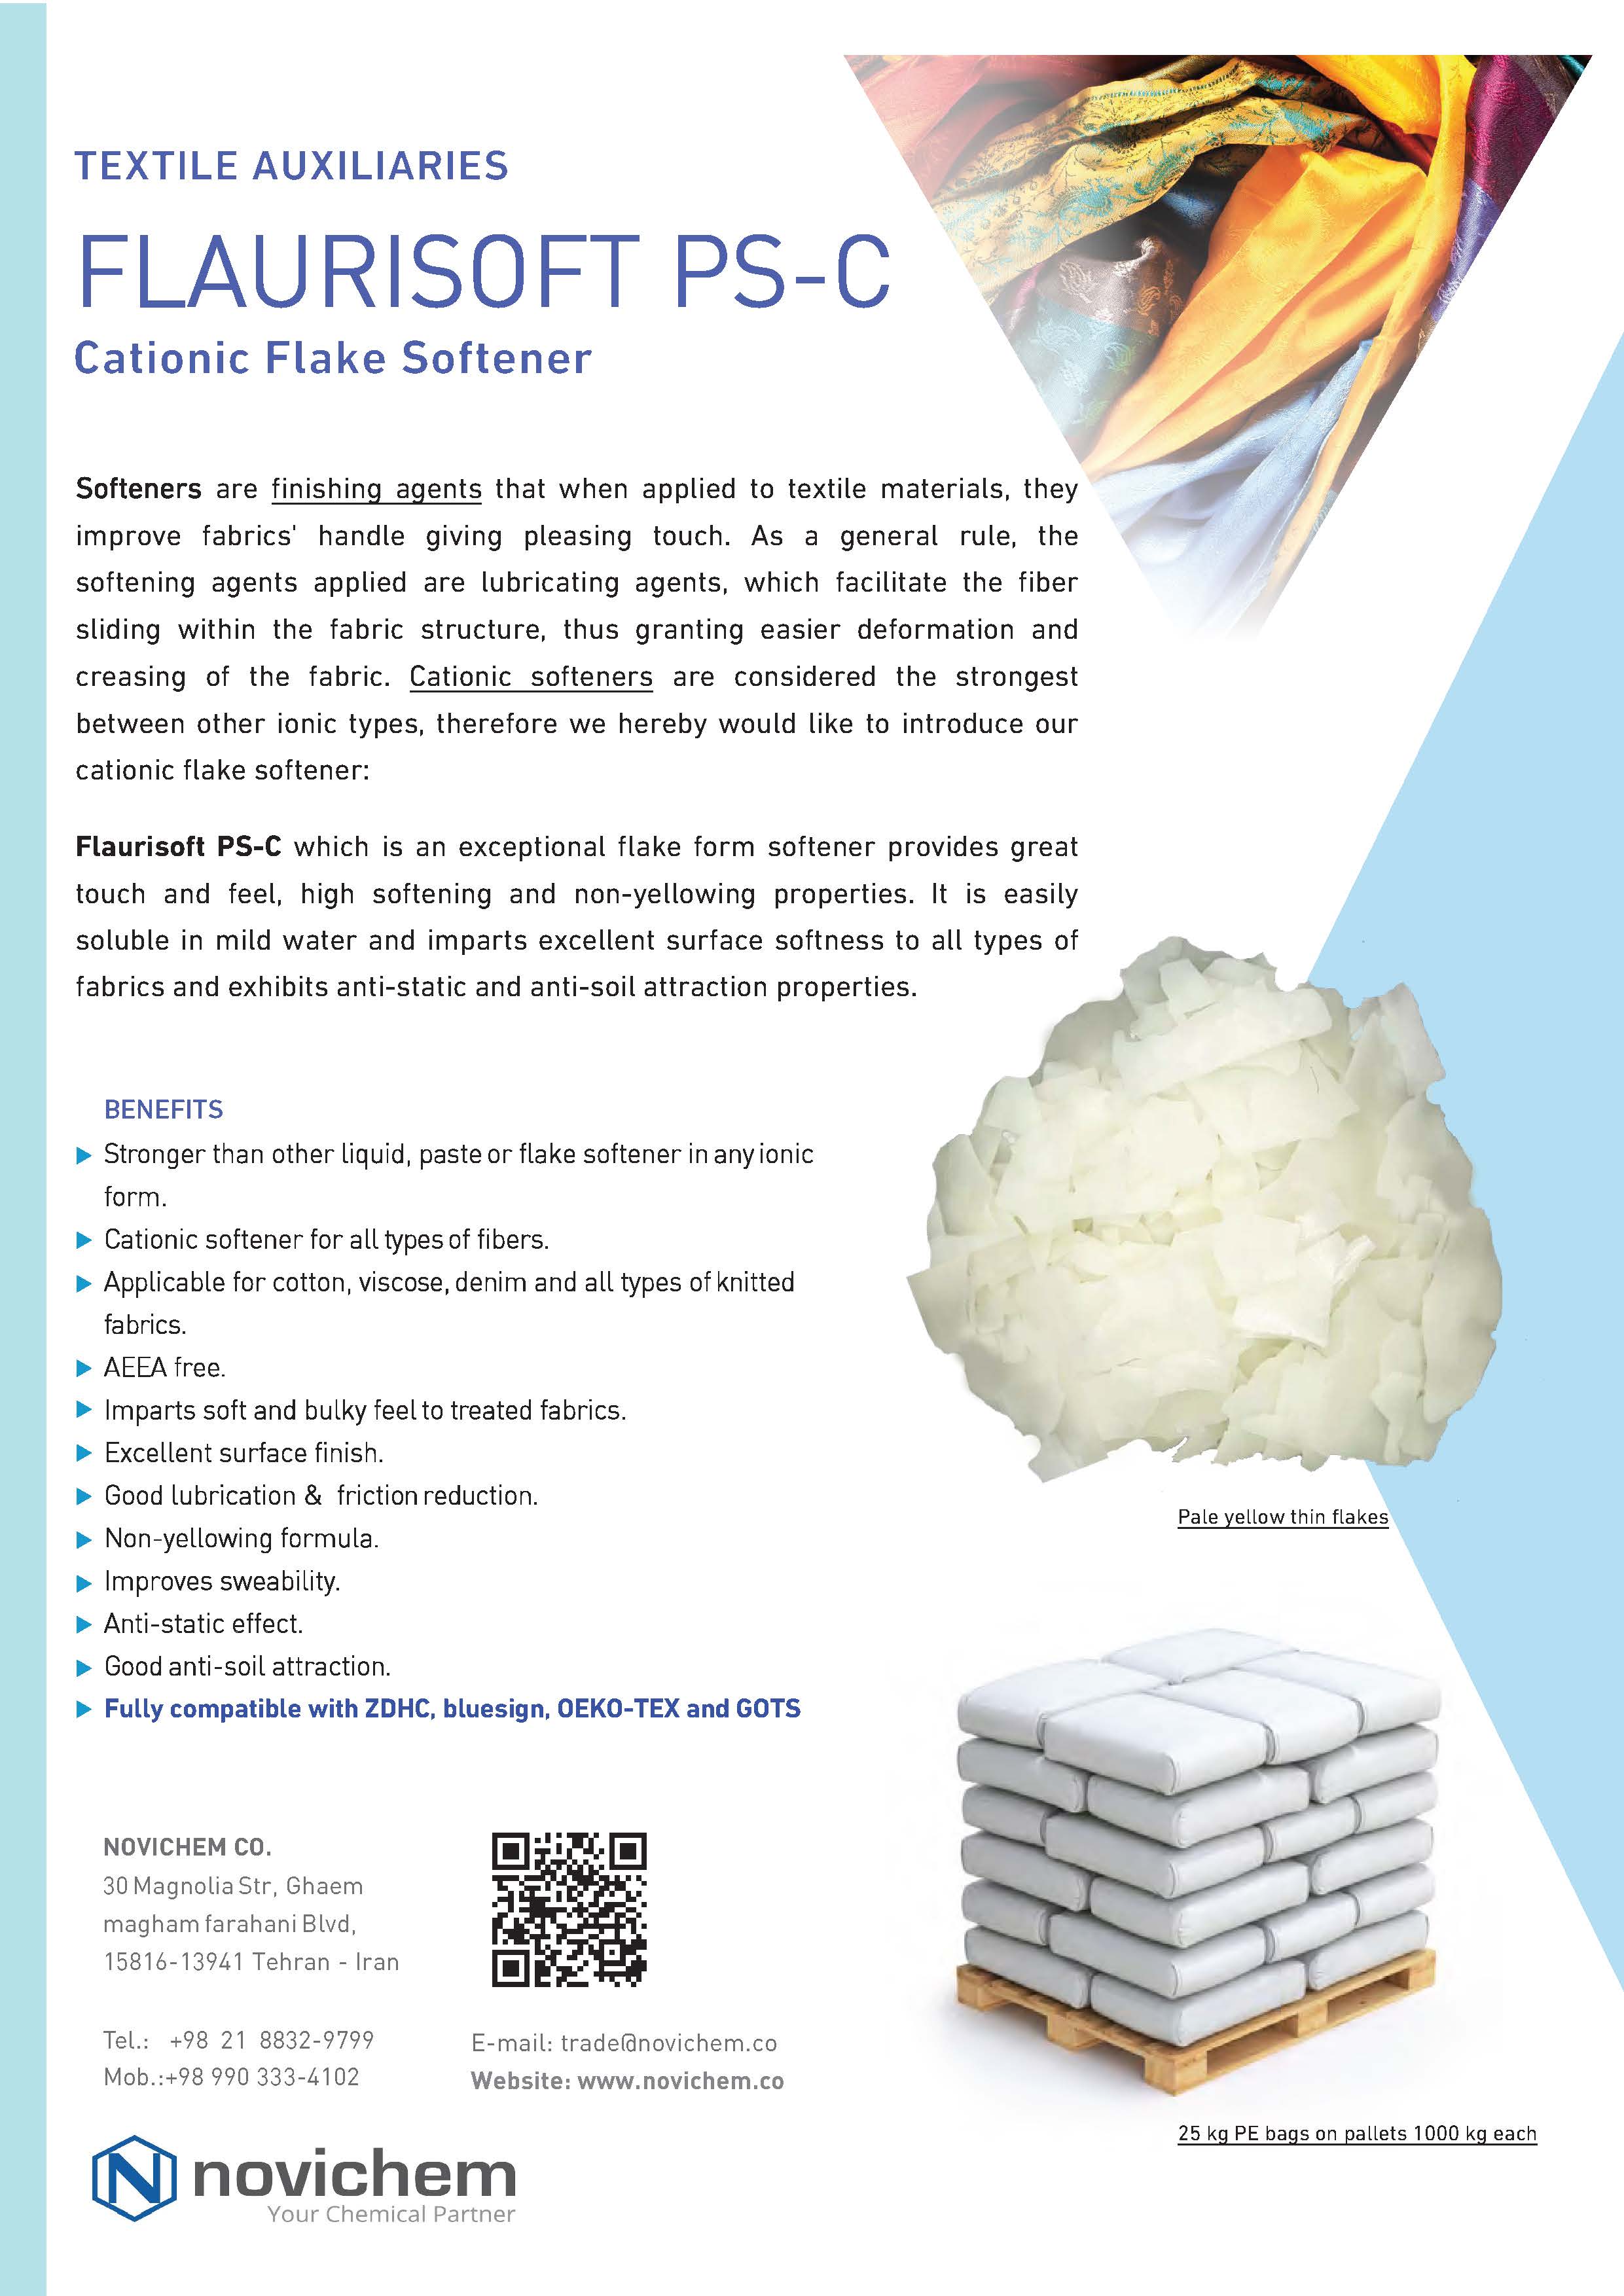 Cationic flake softener from Novichem Co. Iran